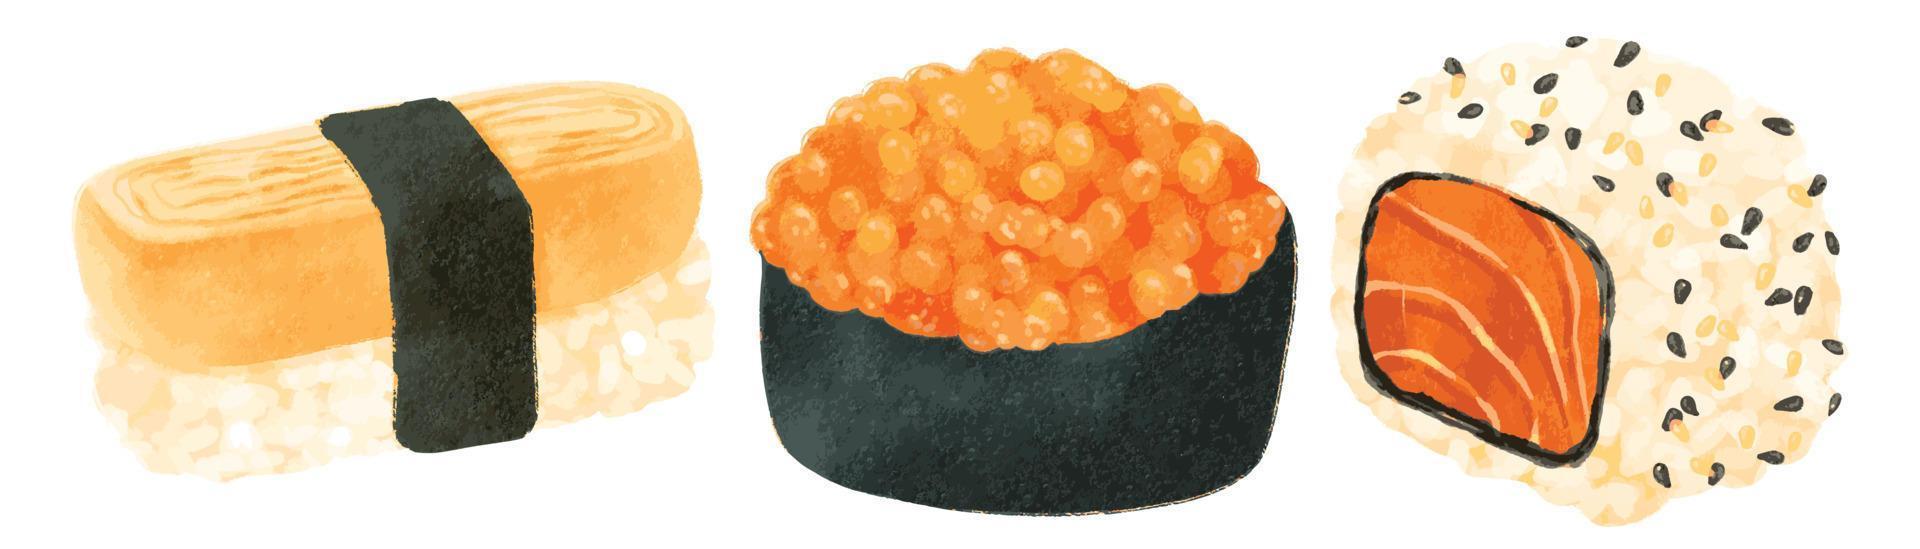 Satz Sushi japanisches Essen Illustrationen Aquarell Stile vektor